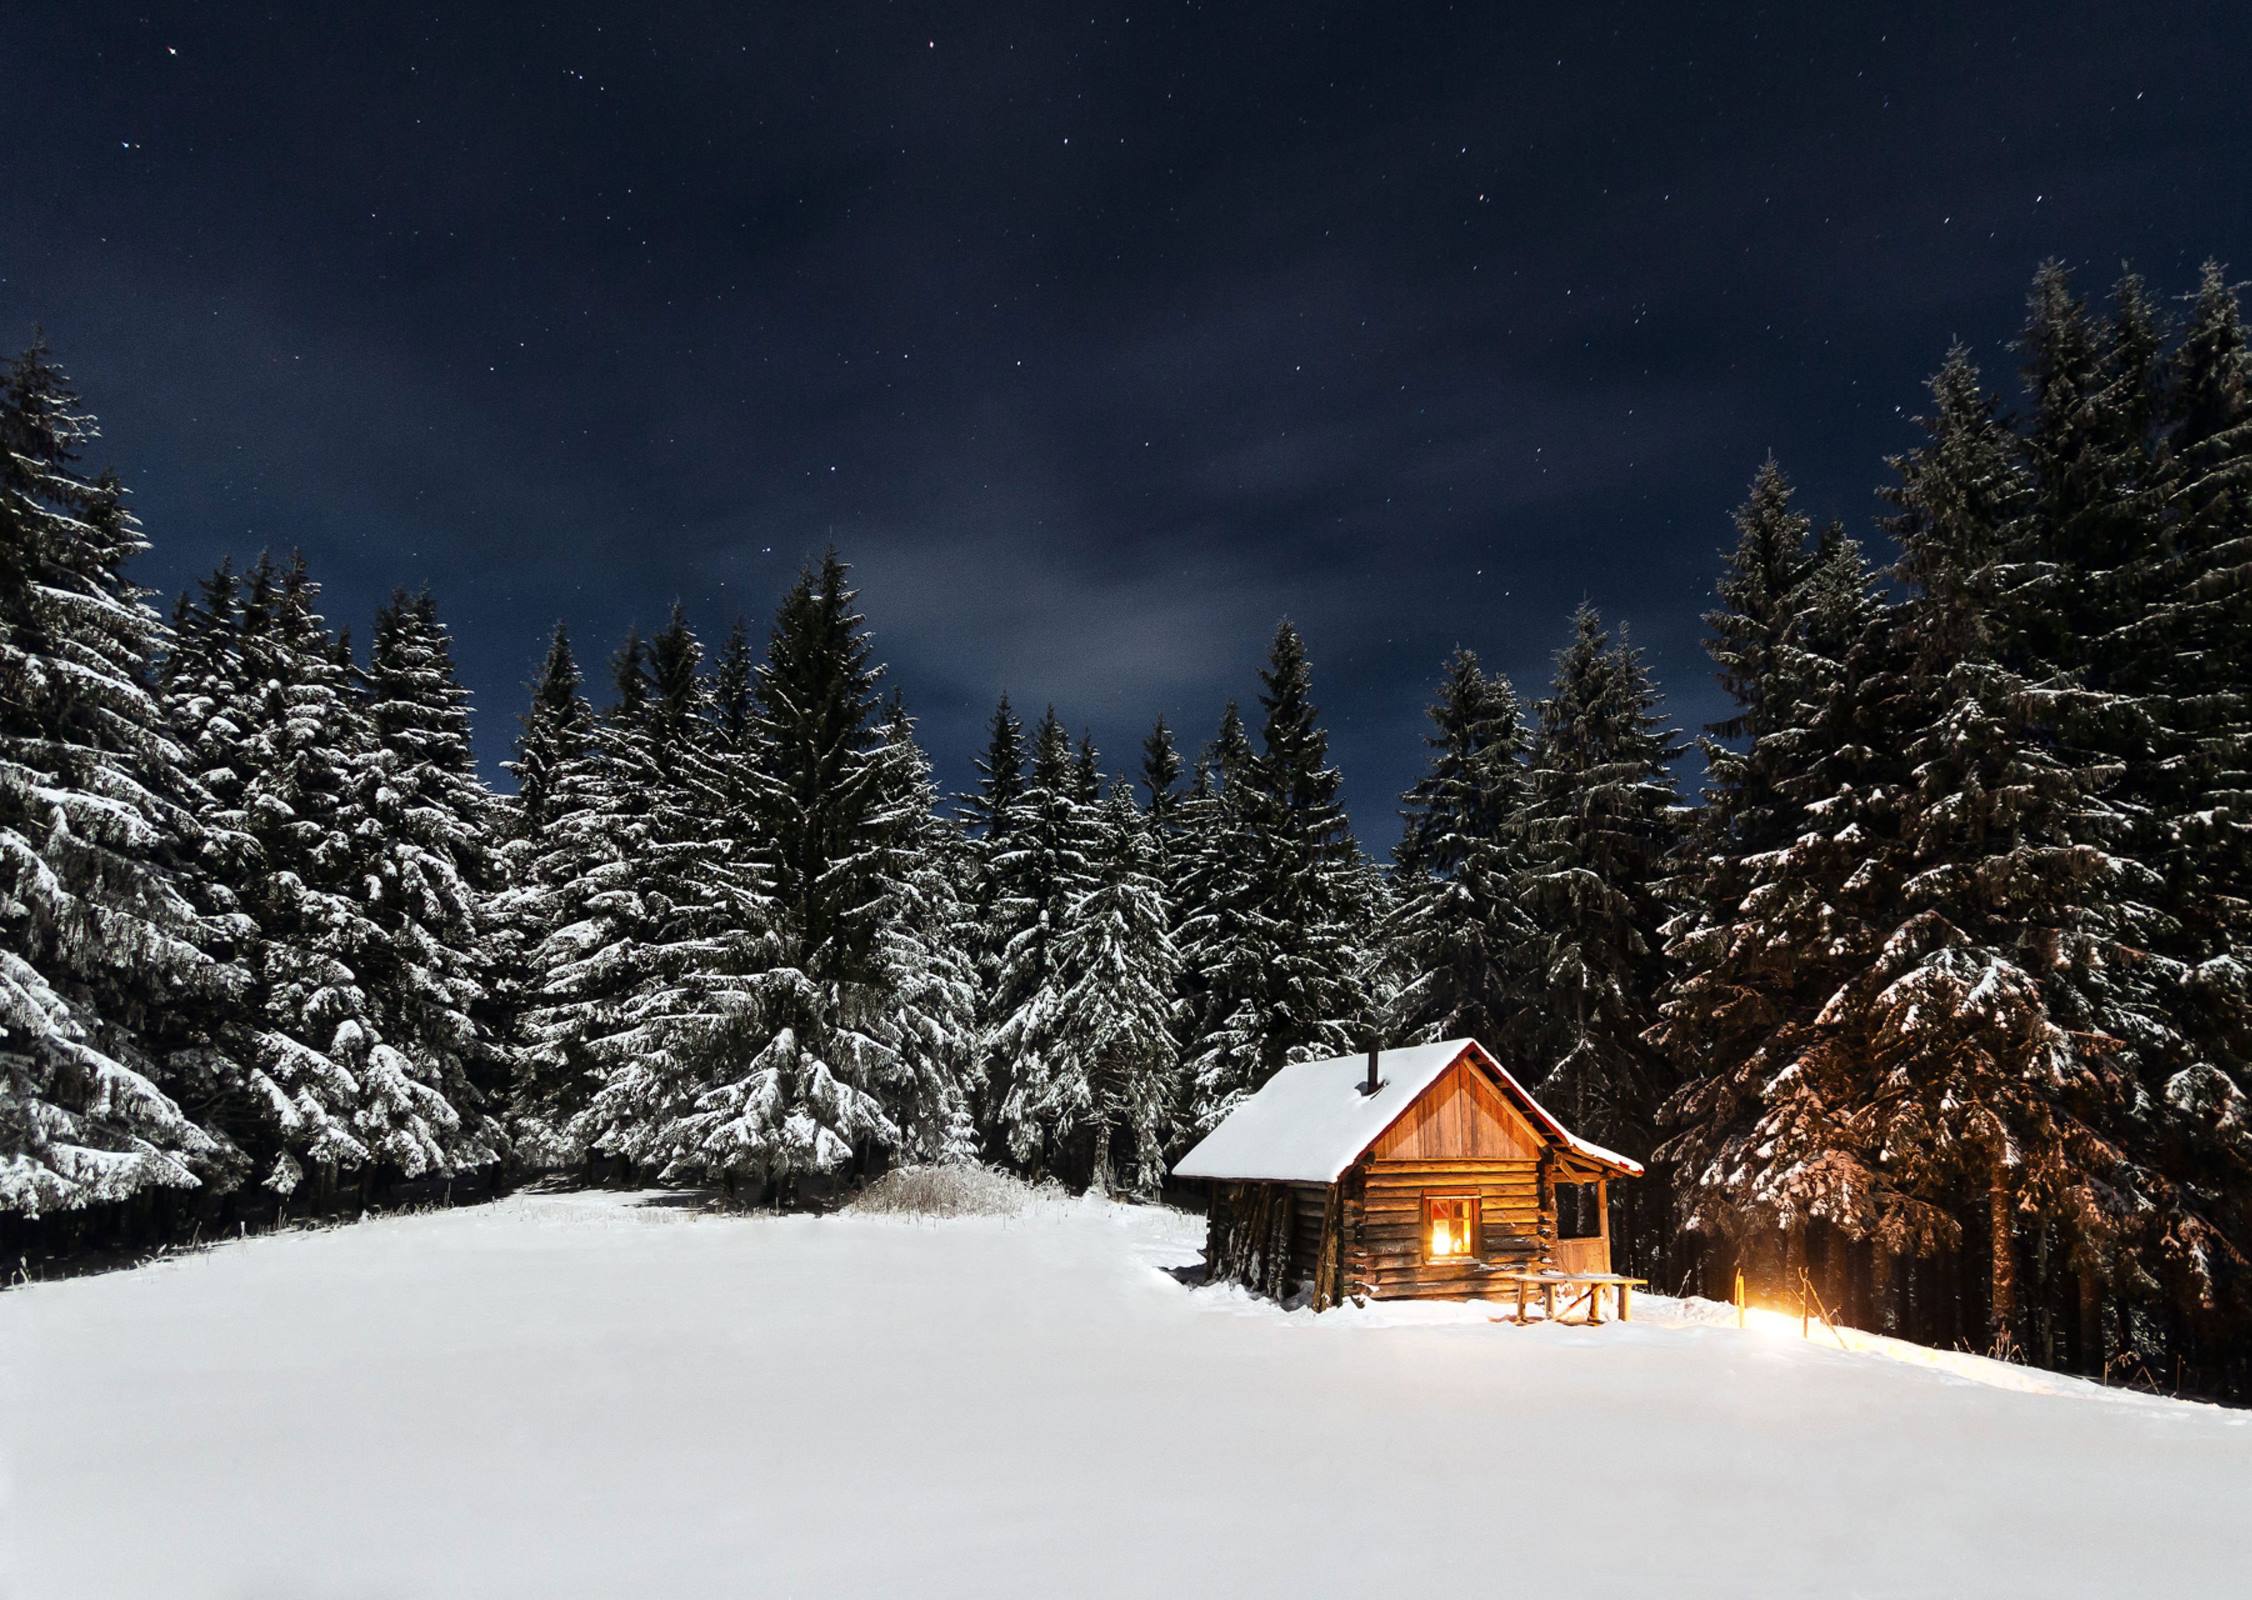 winter night cabin snow fir trees